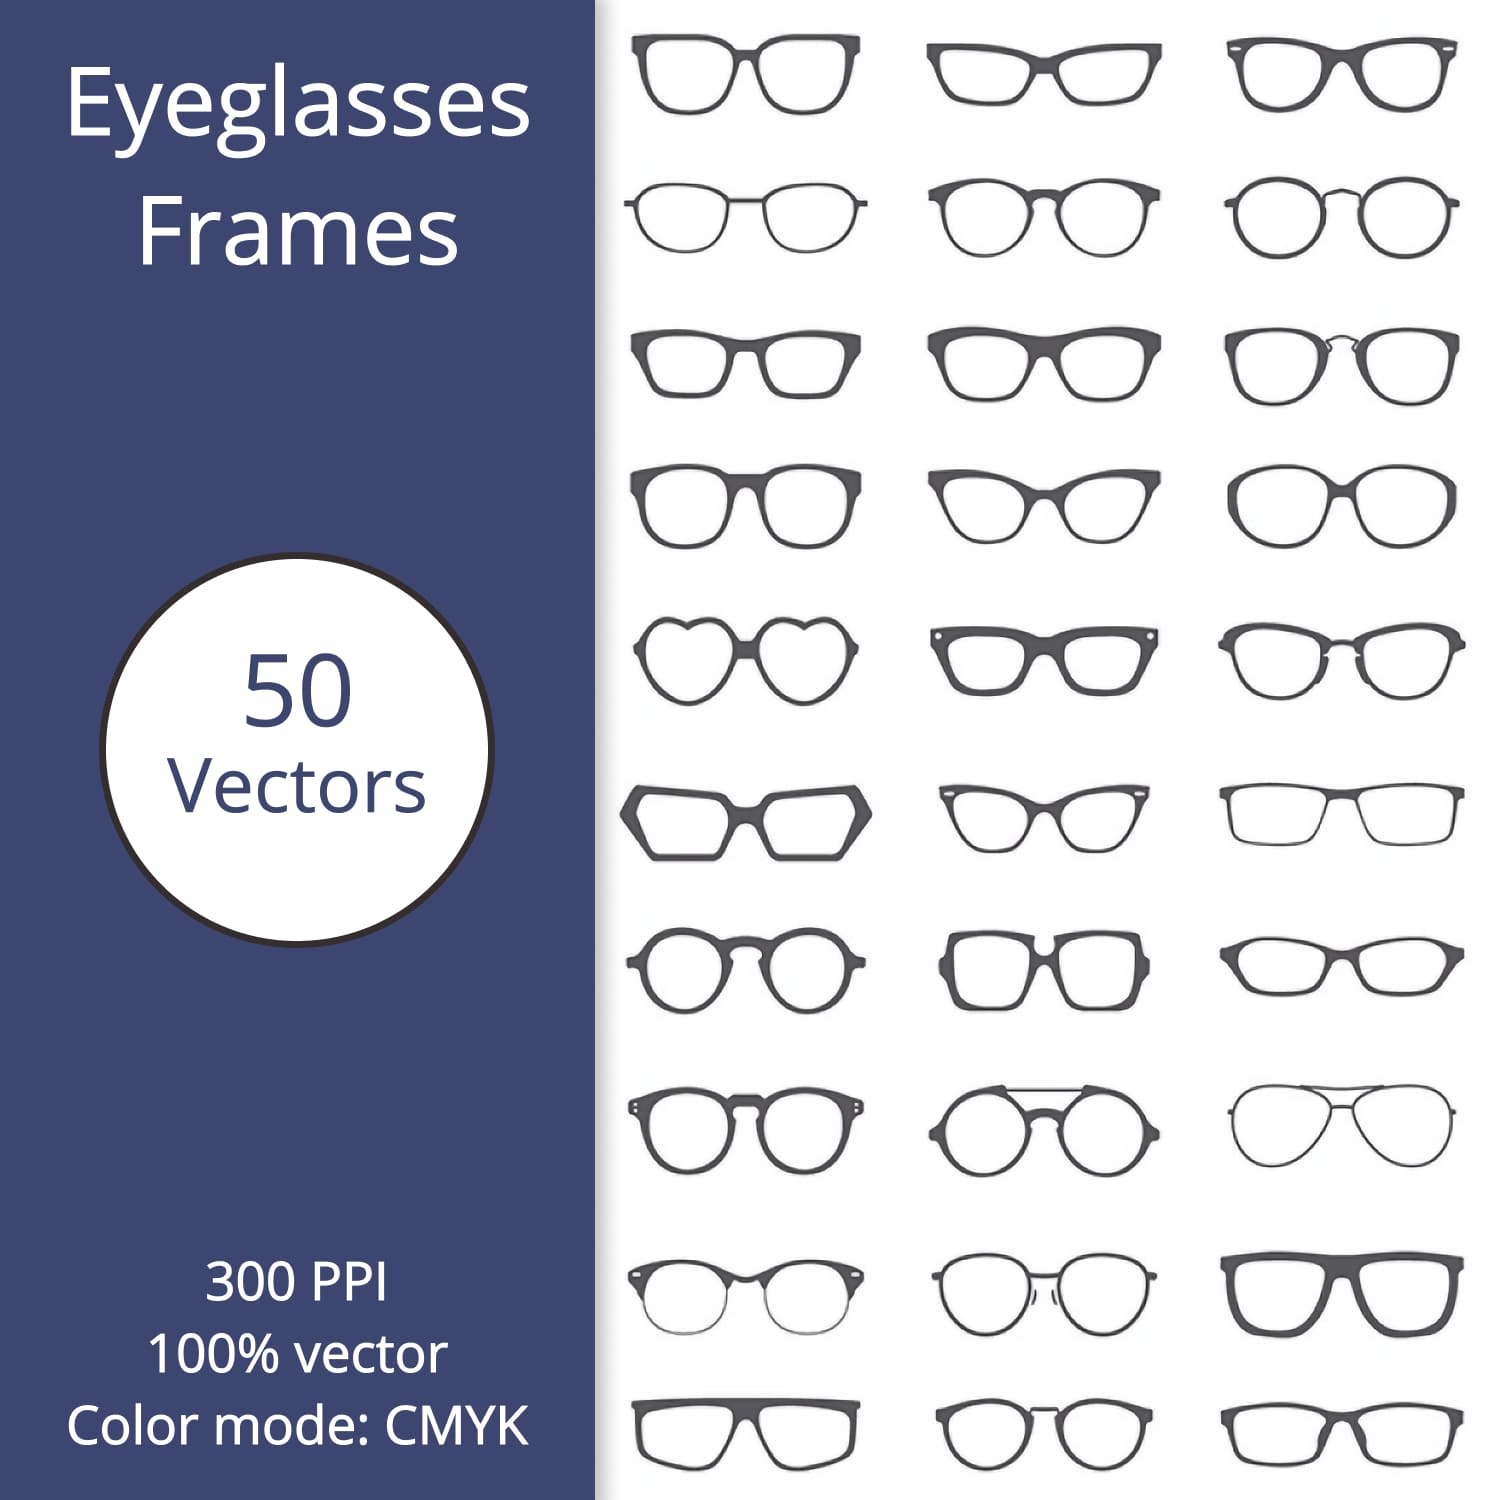 Eyeglasses frames 50 vectors main vector.